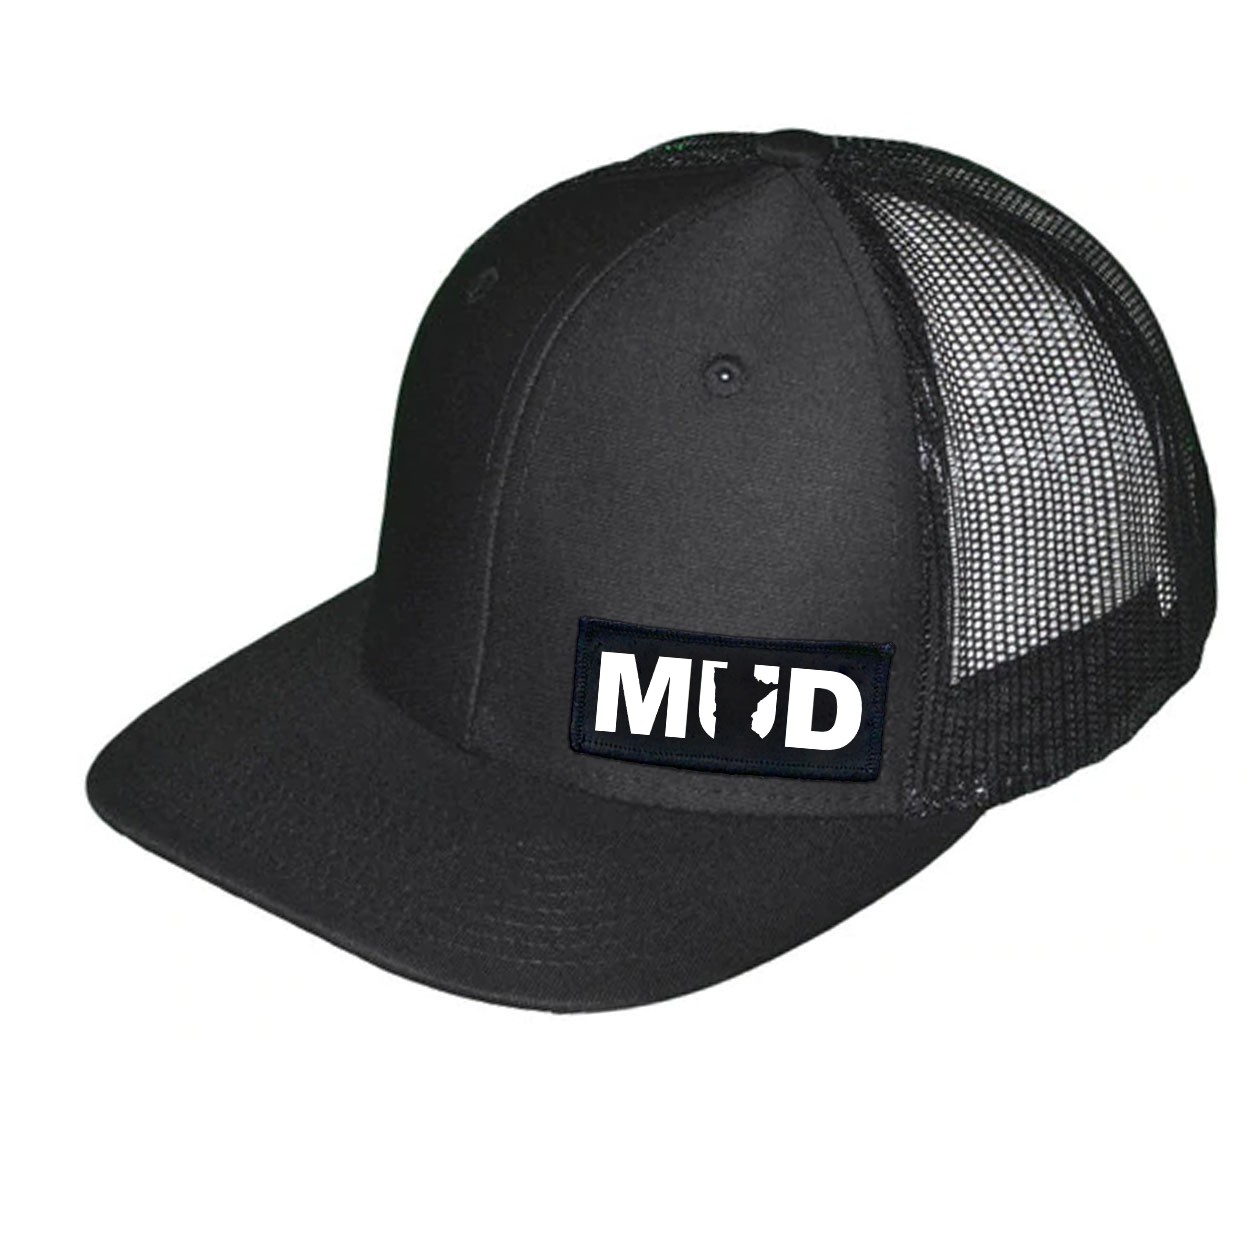 Mud Minnesota Night Out Woven Patch Snapback Trucker Hat Black (White Logo)